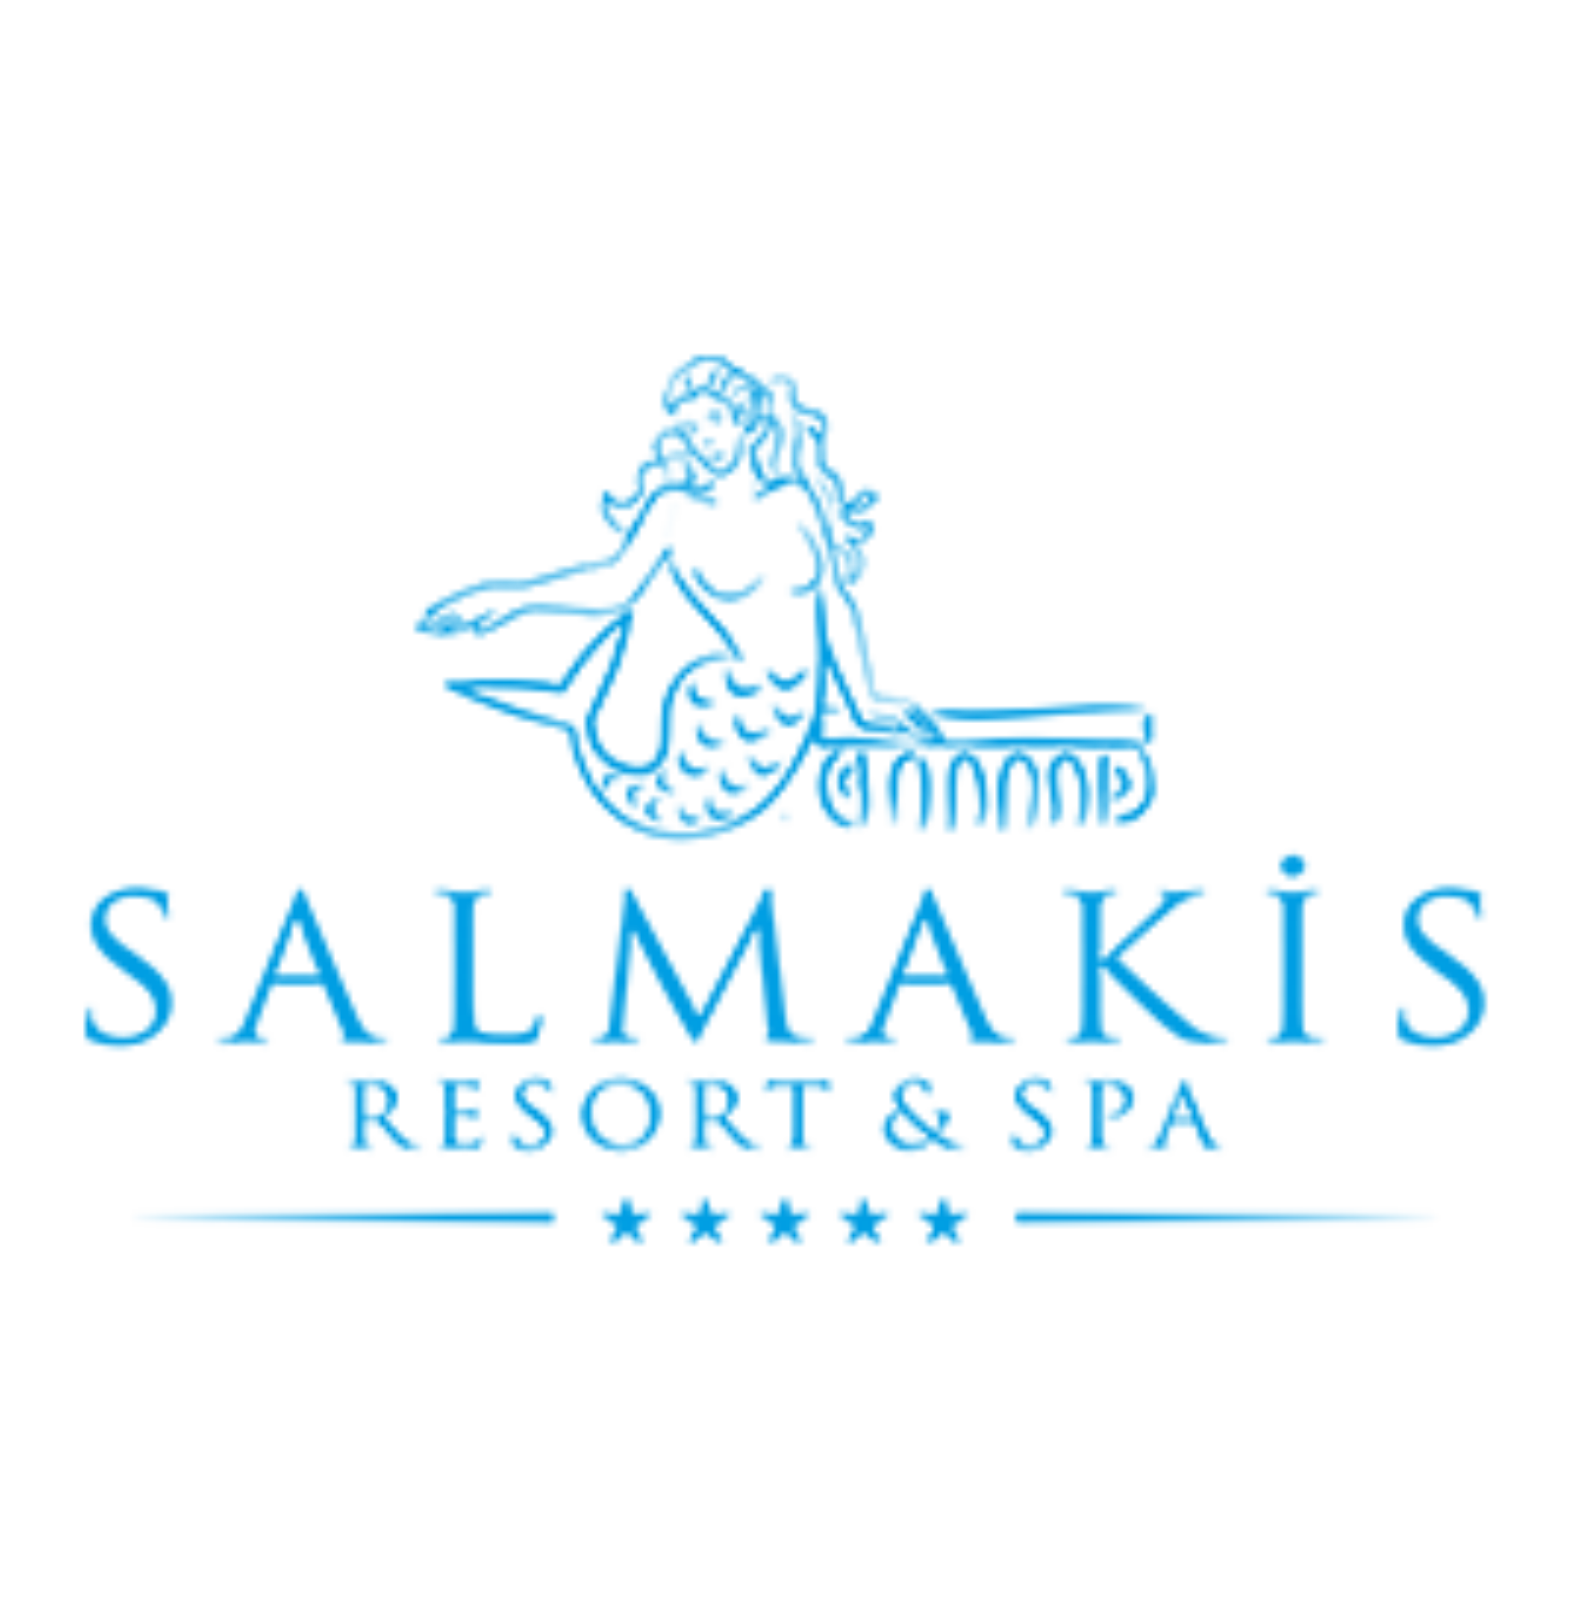 SALMAKIS BEACH RESORT & SPA